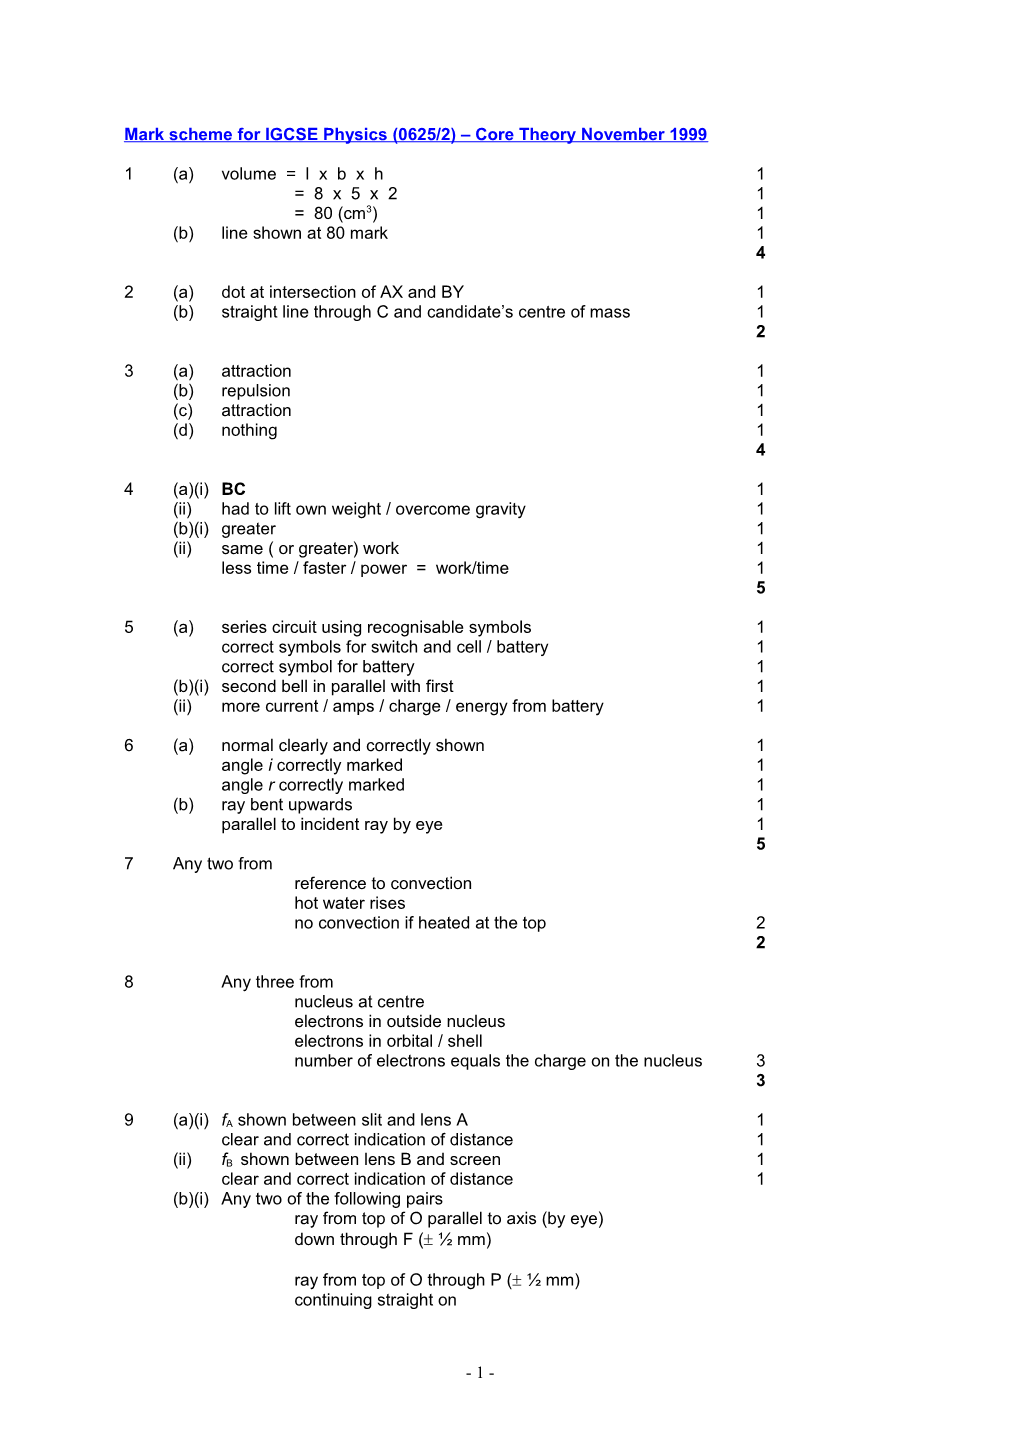 Mark Scheme for IGCSE Physics (0625/2) Core Theory November 1999